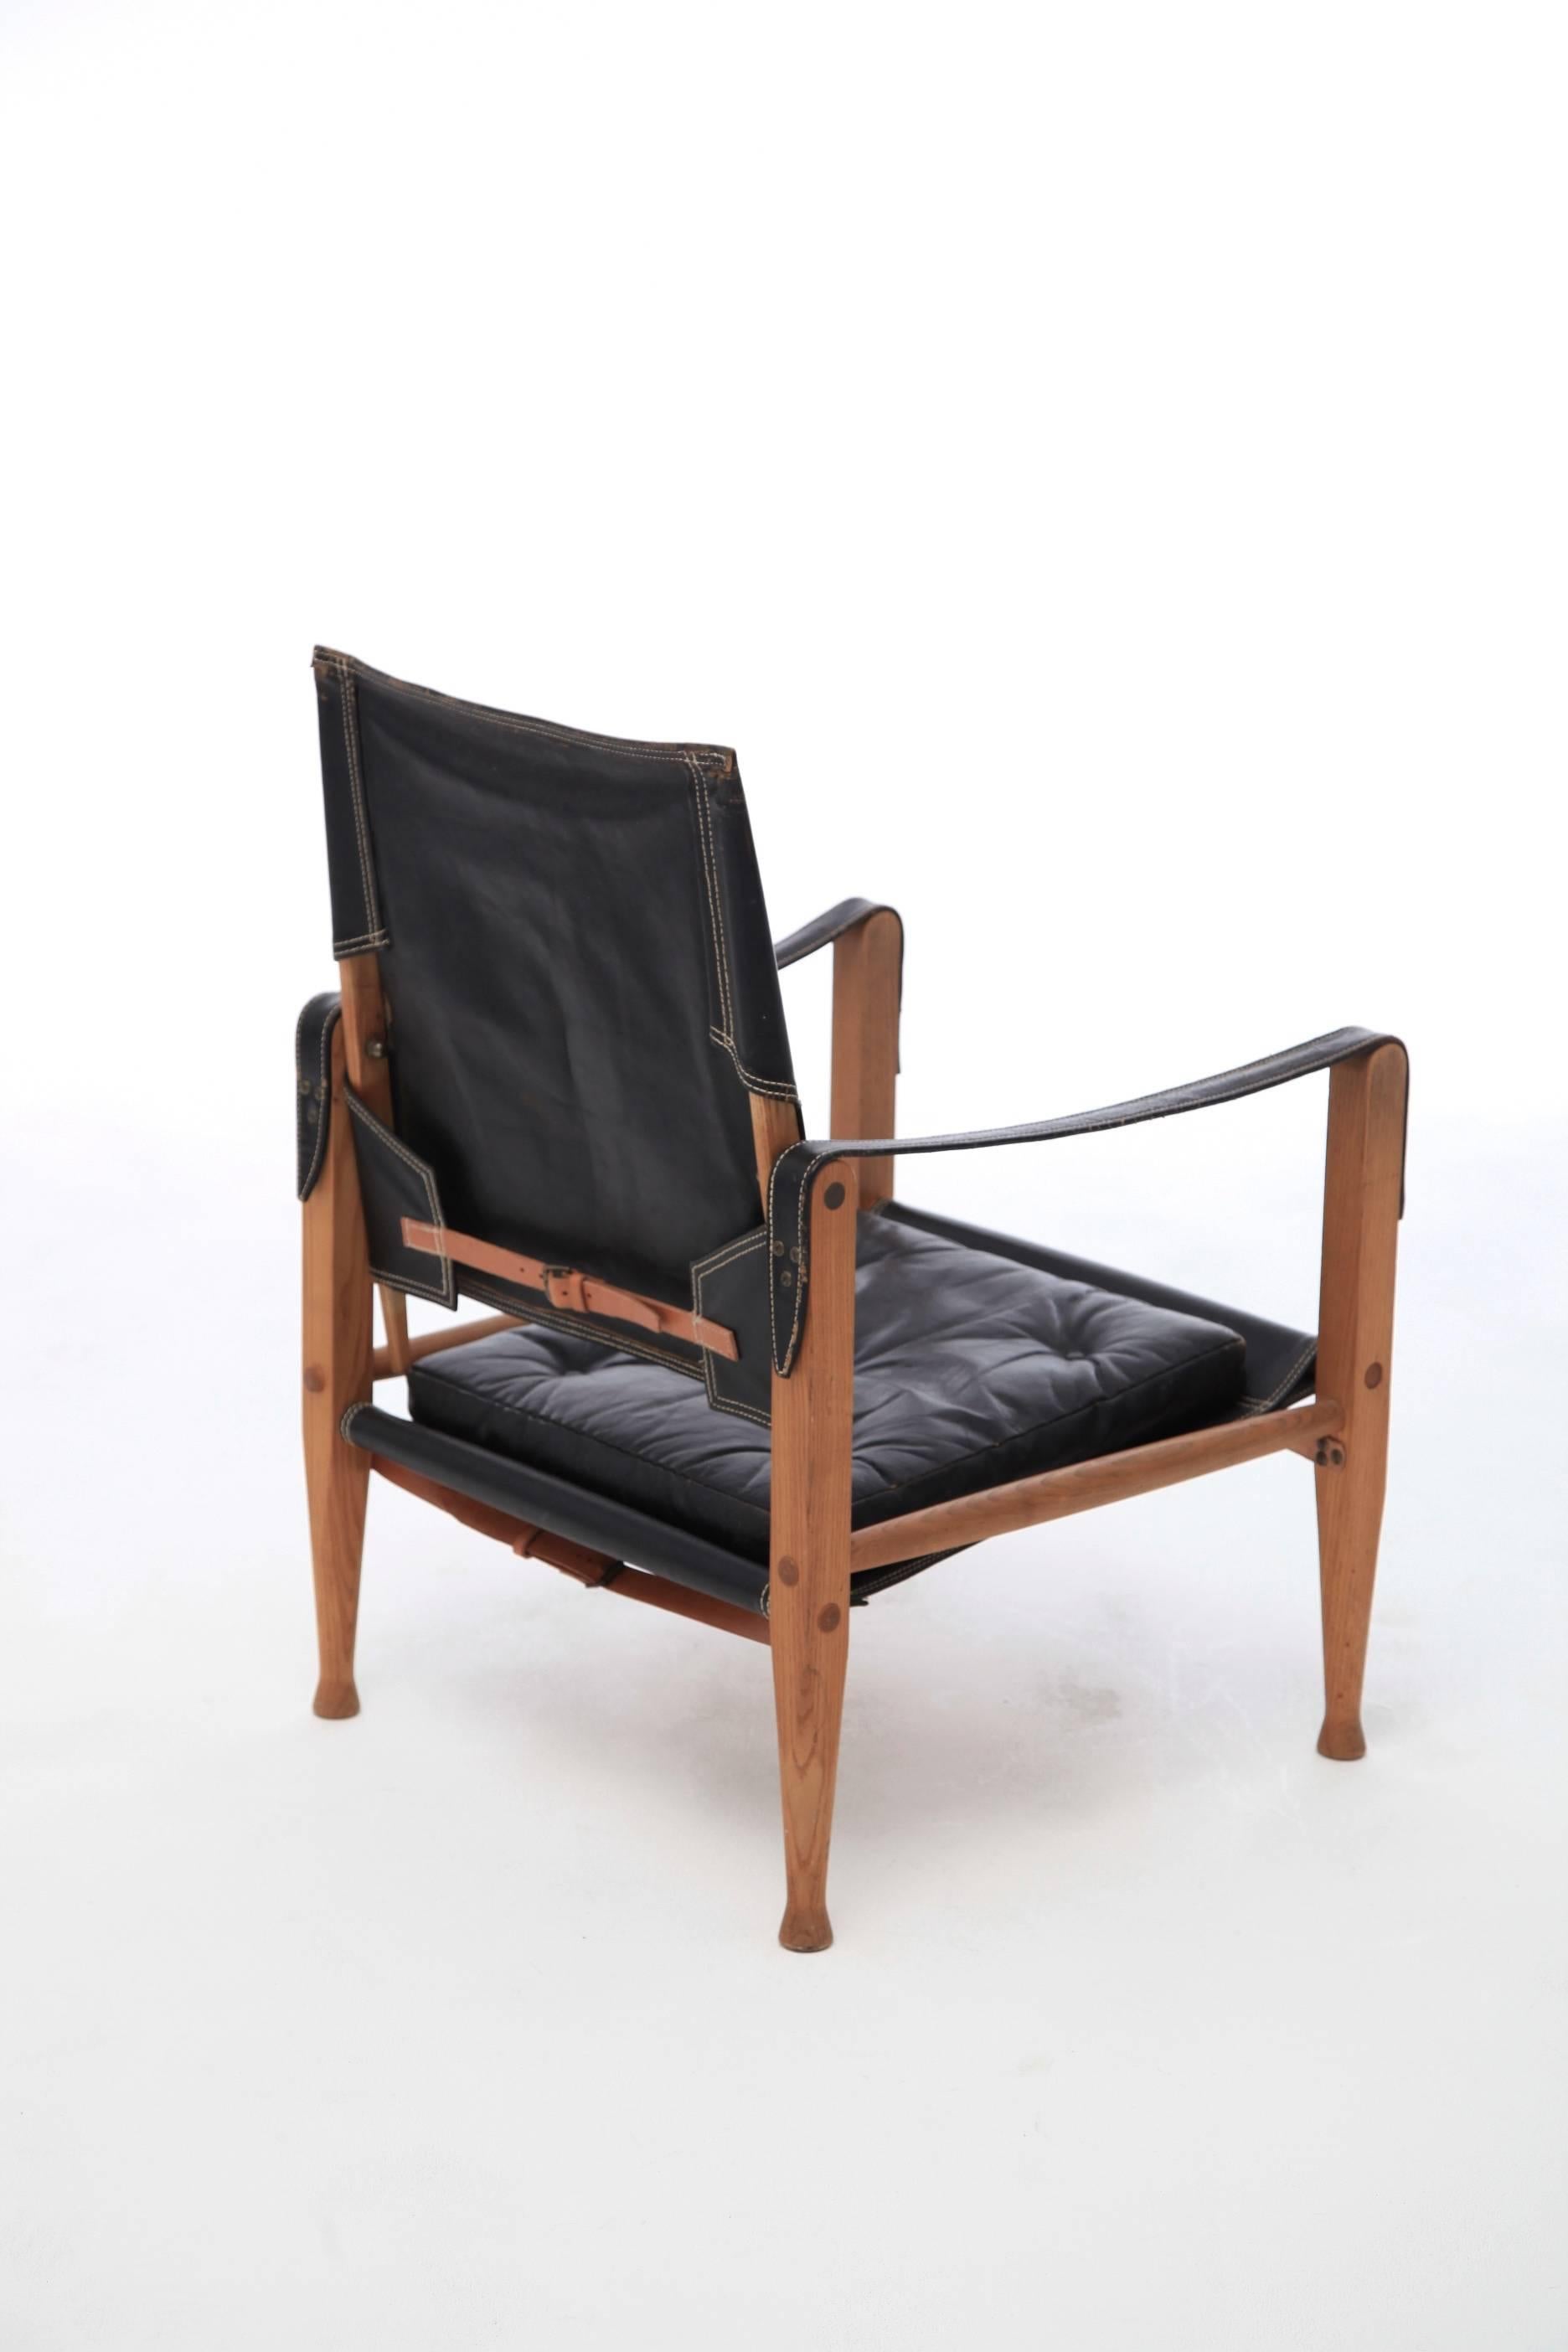 Scandinavian Modern Kaare Klint Safari Campaign Chair, Designed in 1933 for Rud. Rasmussen